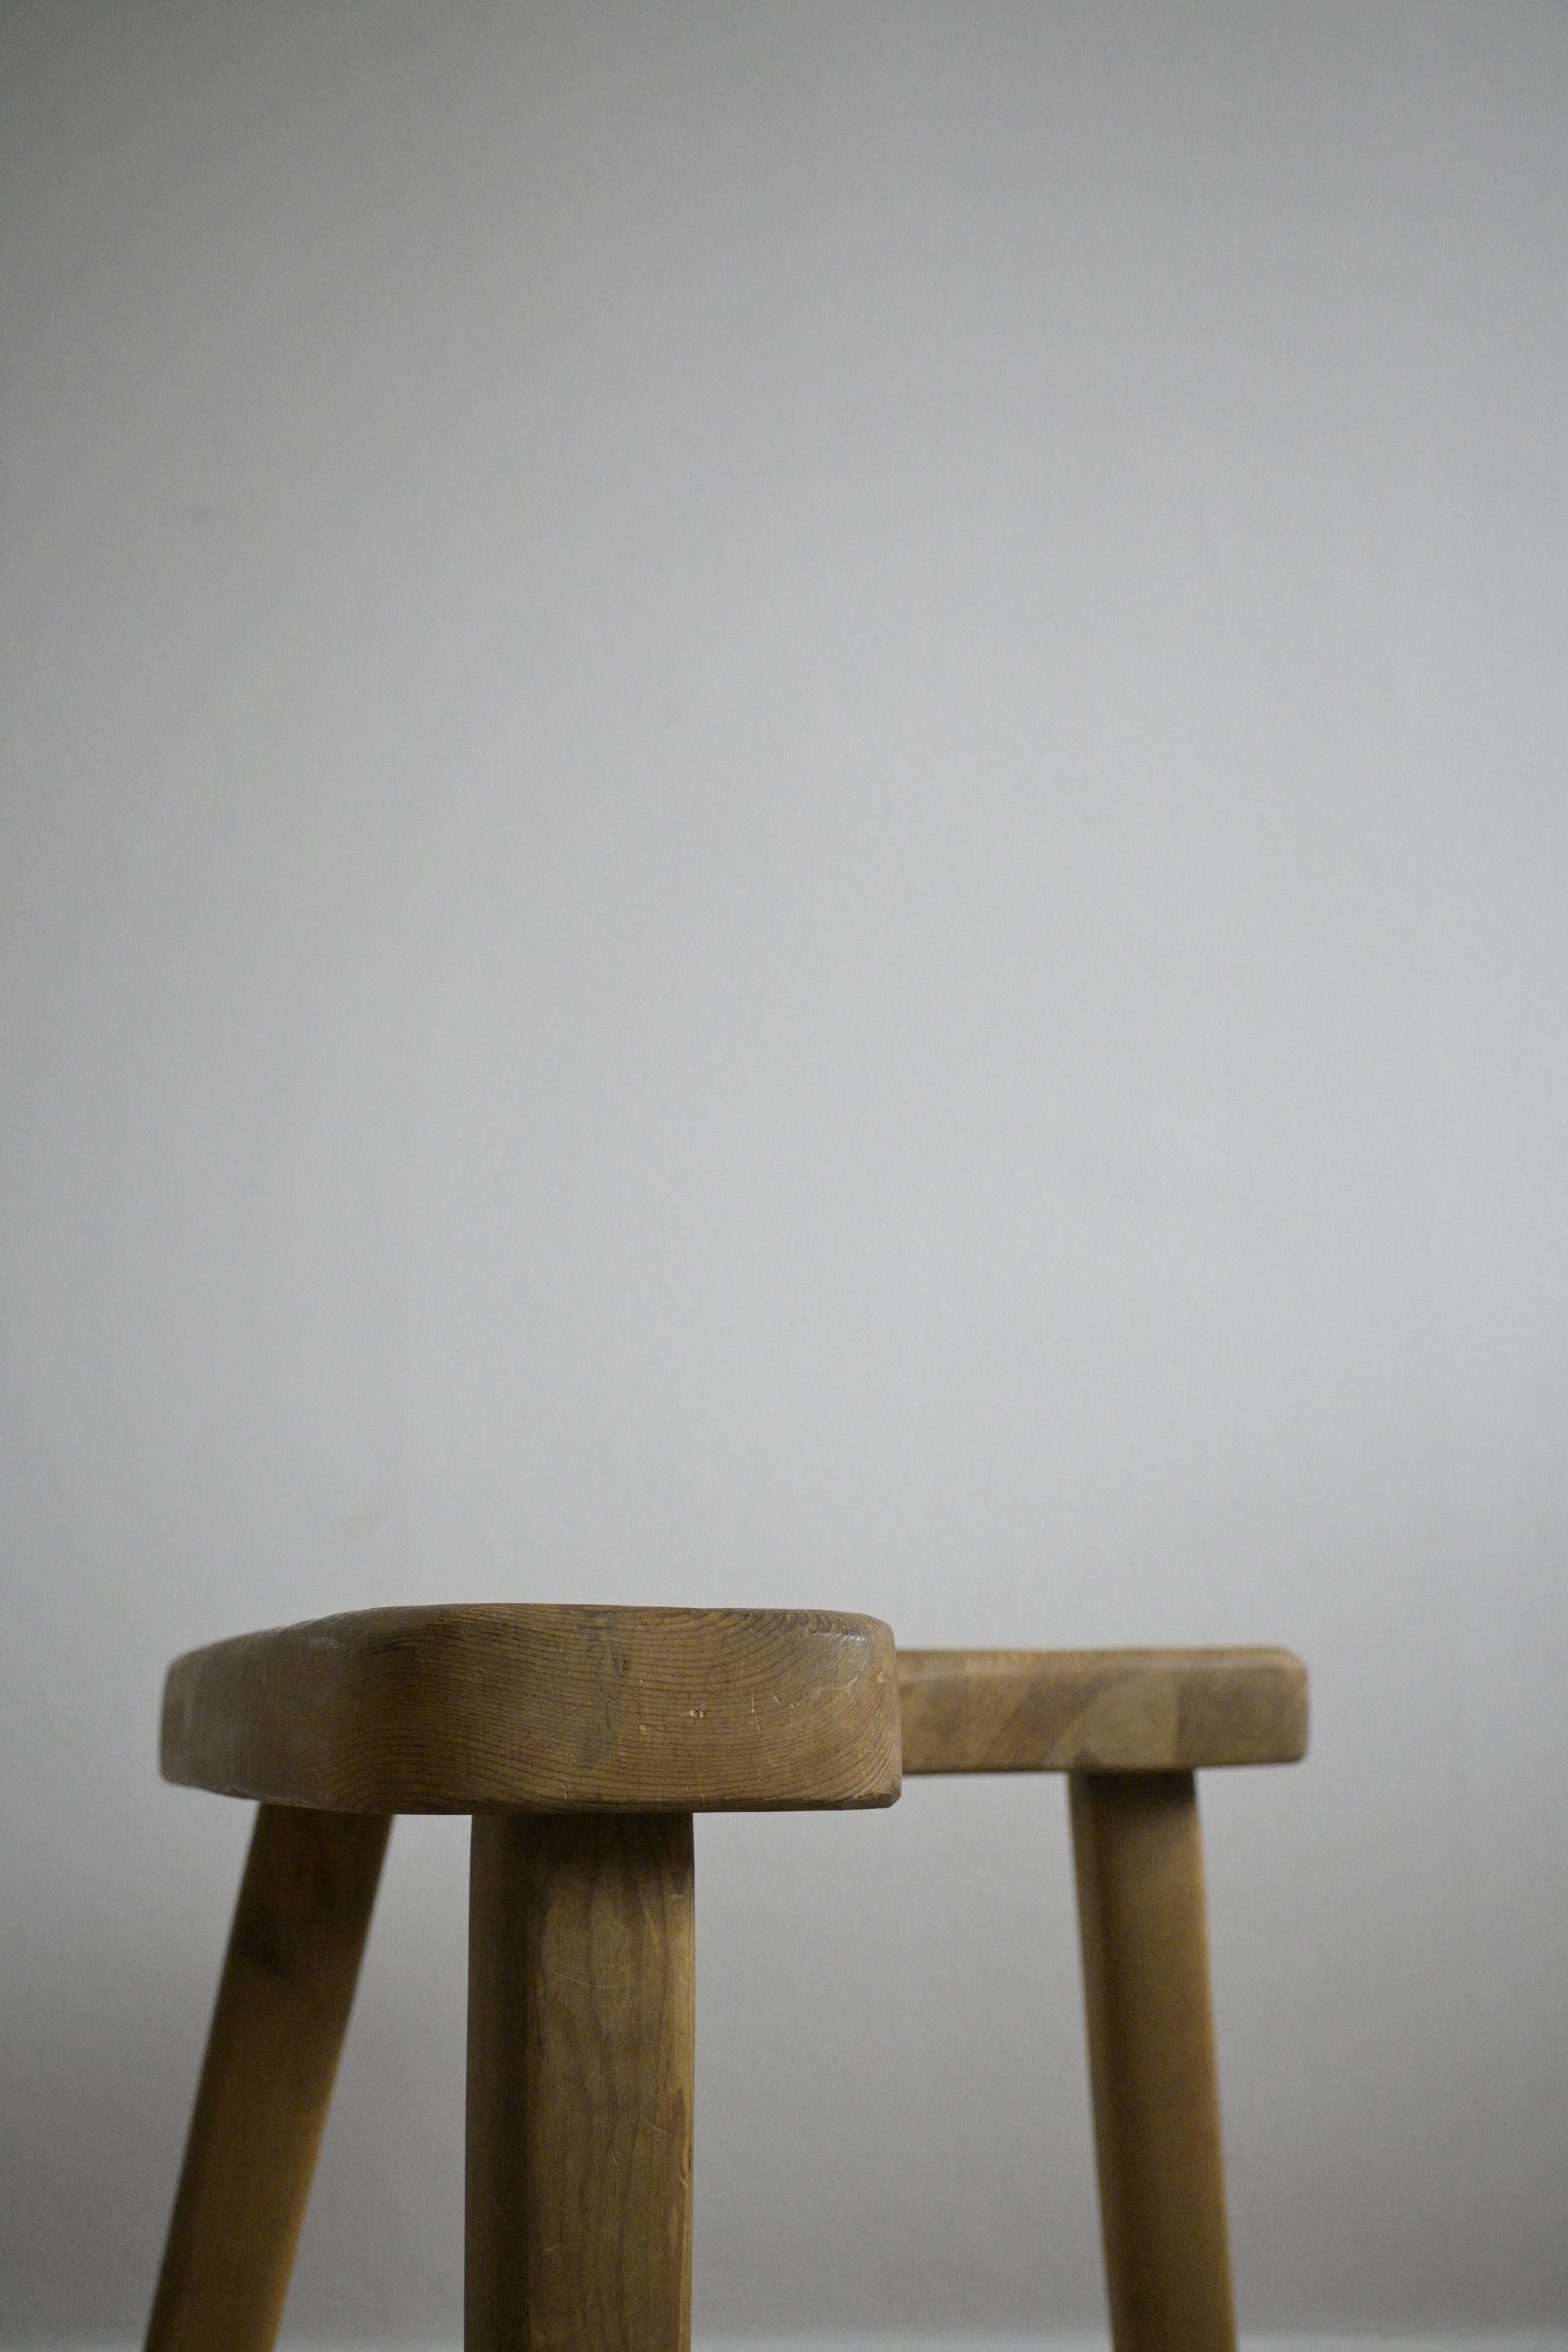 Unsymmetric Pine Stool or Side Table by Stig Sandqvist, Vemdalen, Sweden 1950s For Sale 2